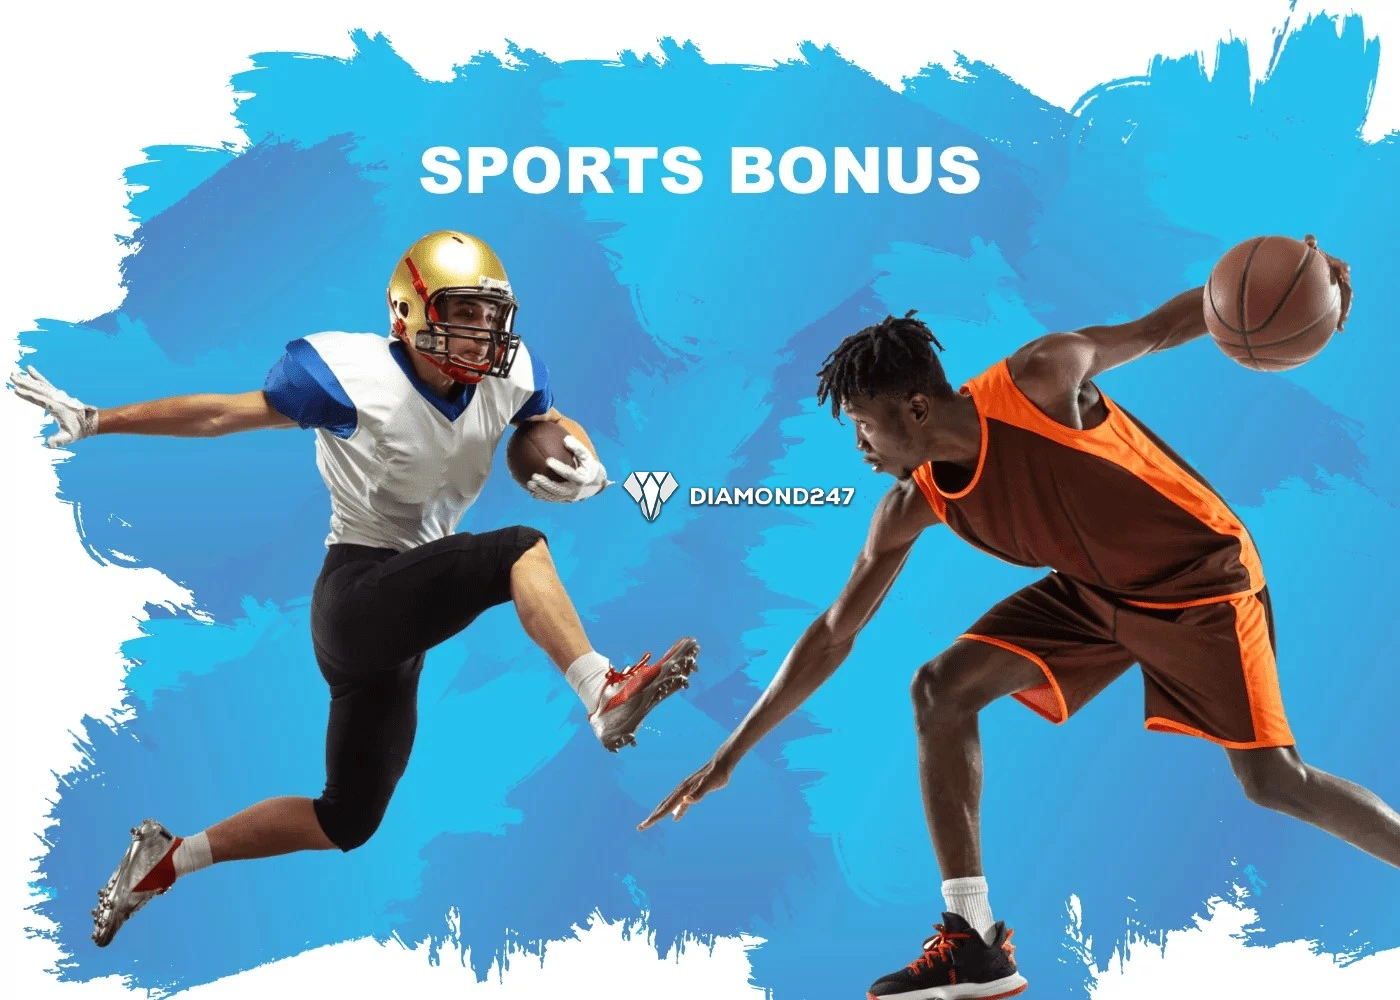 sports bonus at diamondexch